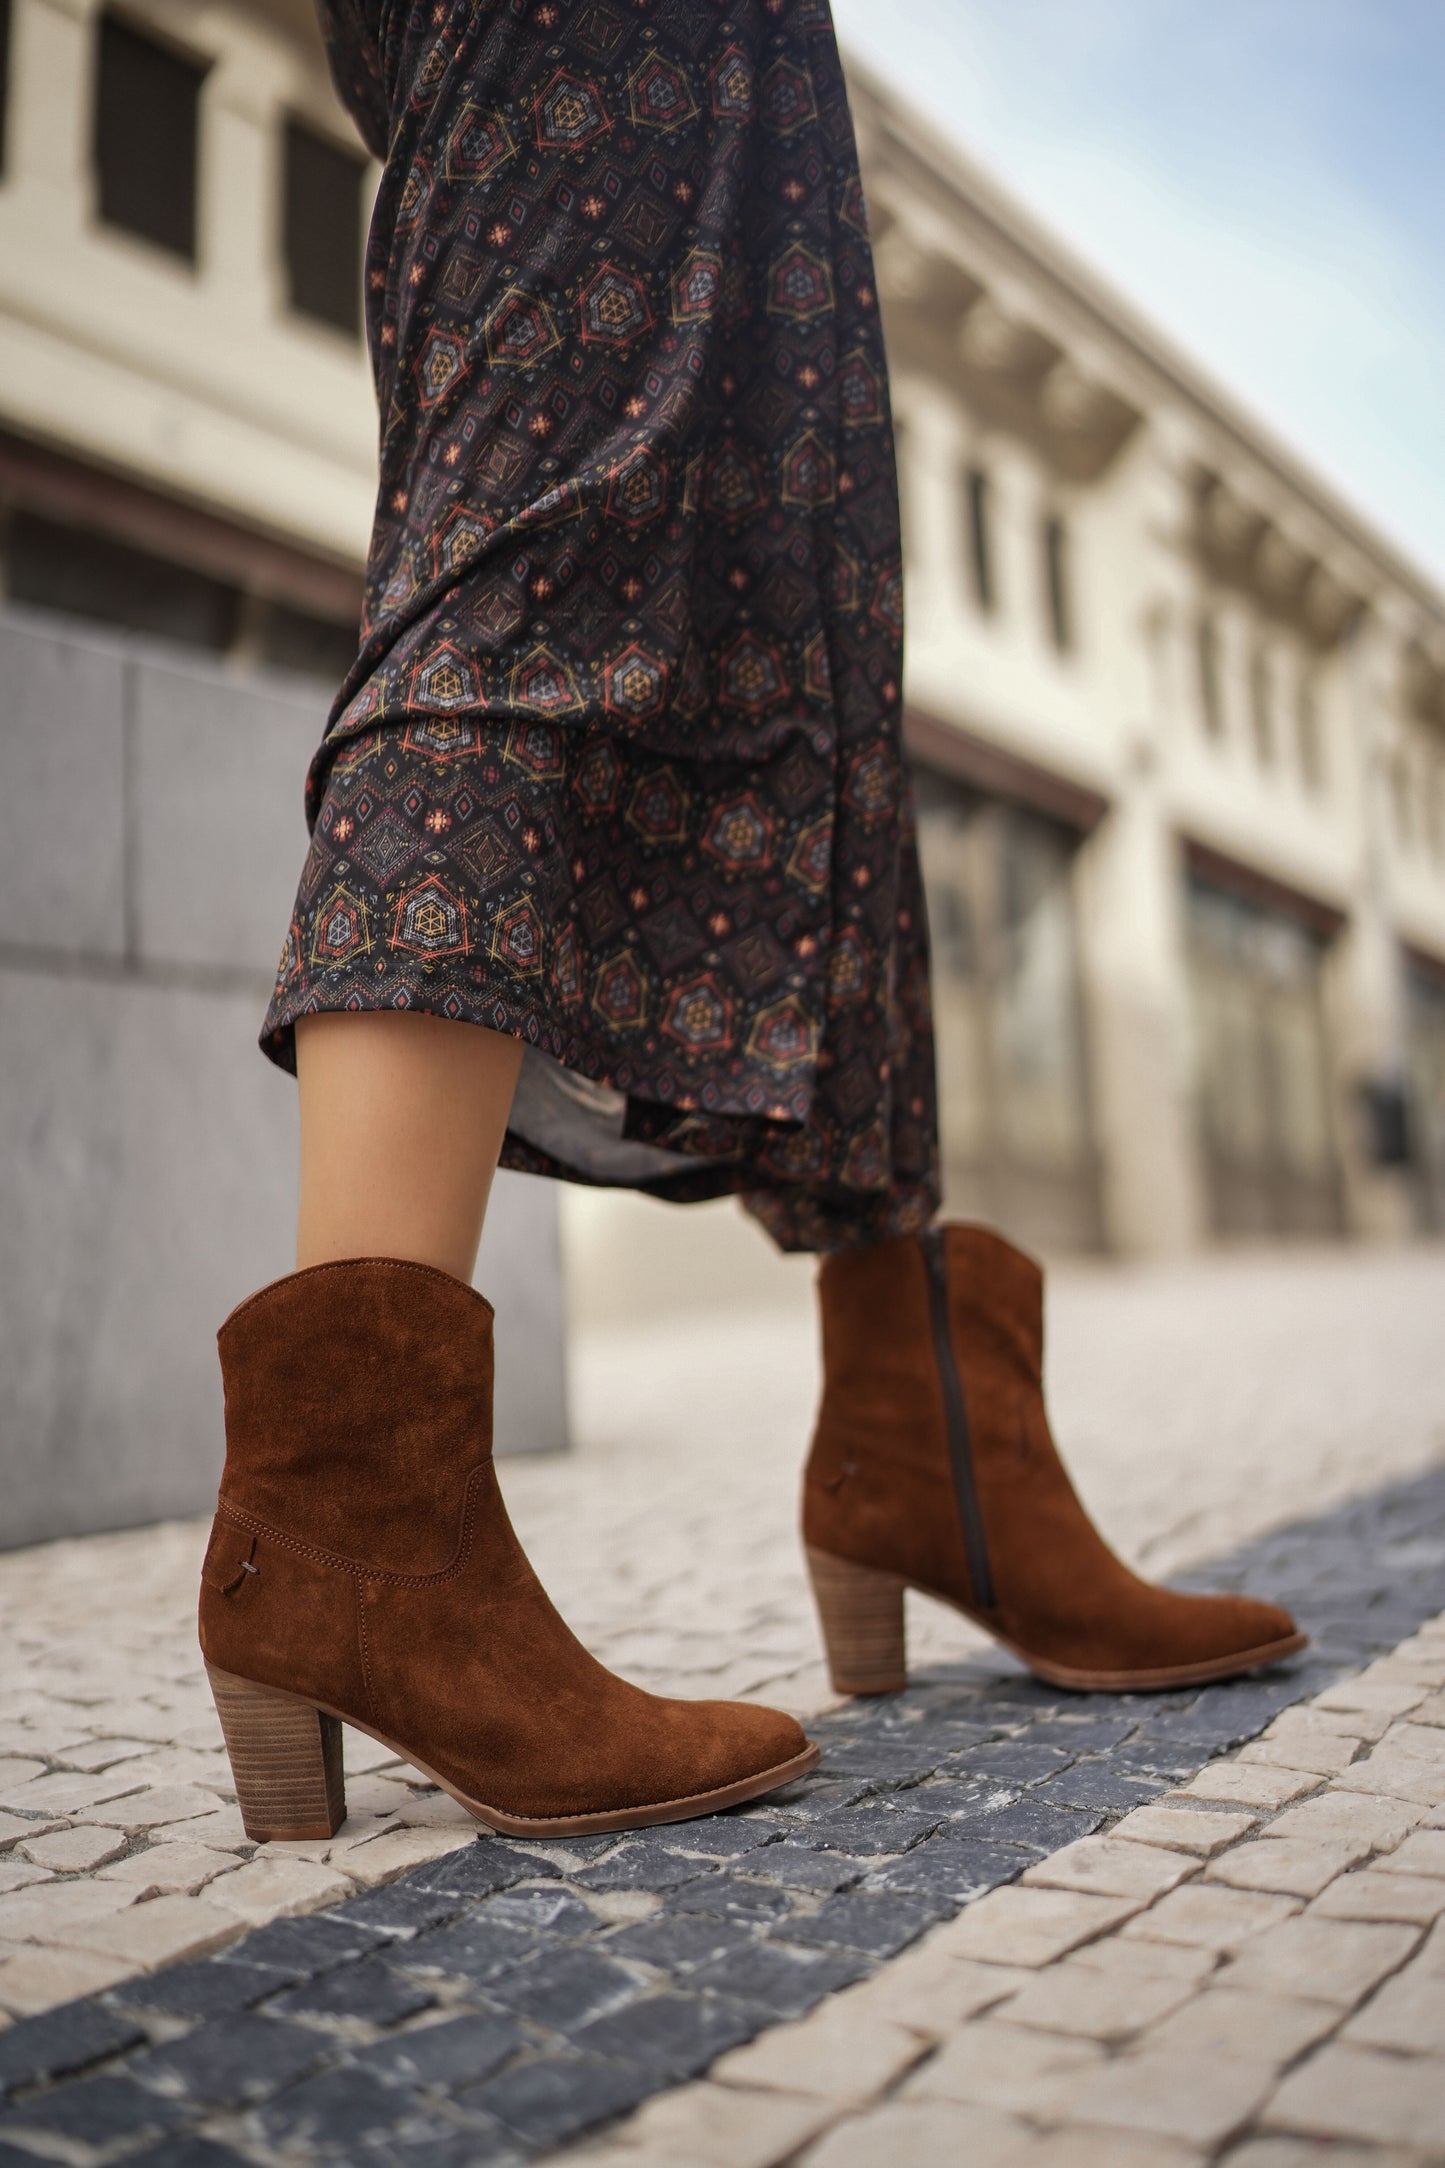 Leather boot with medium heel